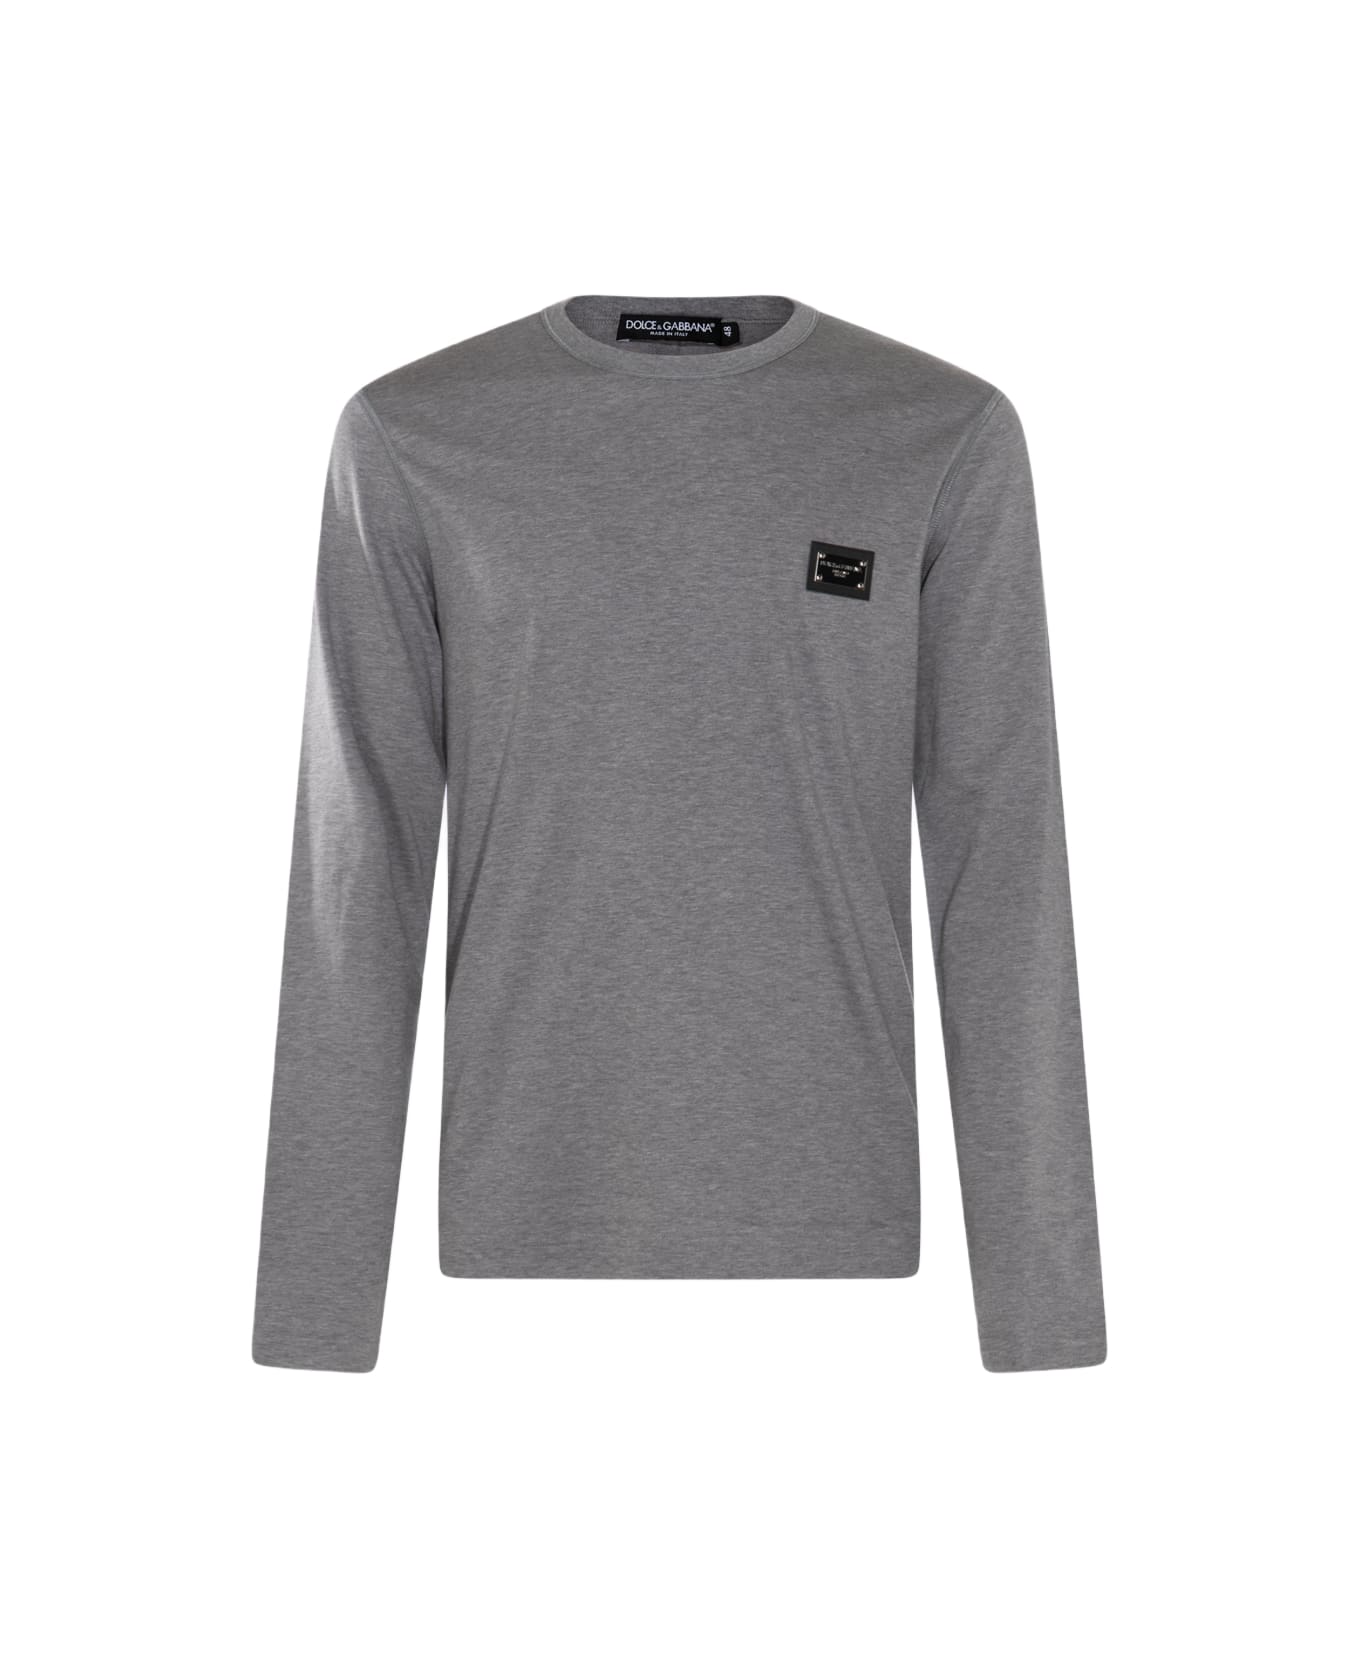 Dolce & Gabbana Grey Cotton T-shirt - MELANGE GRIGI シャツ